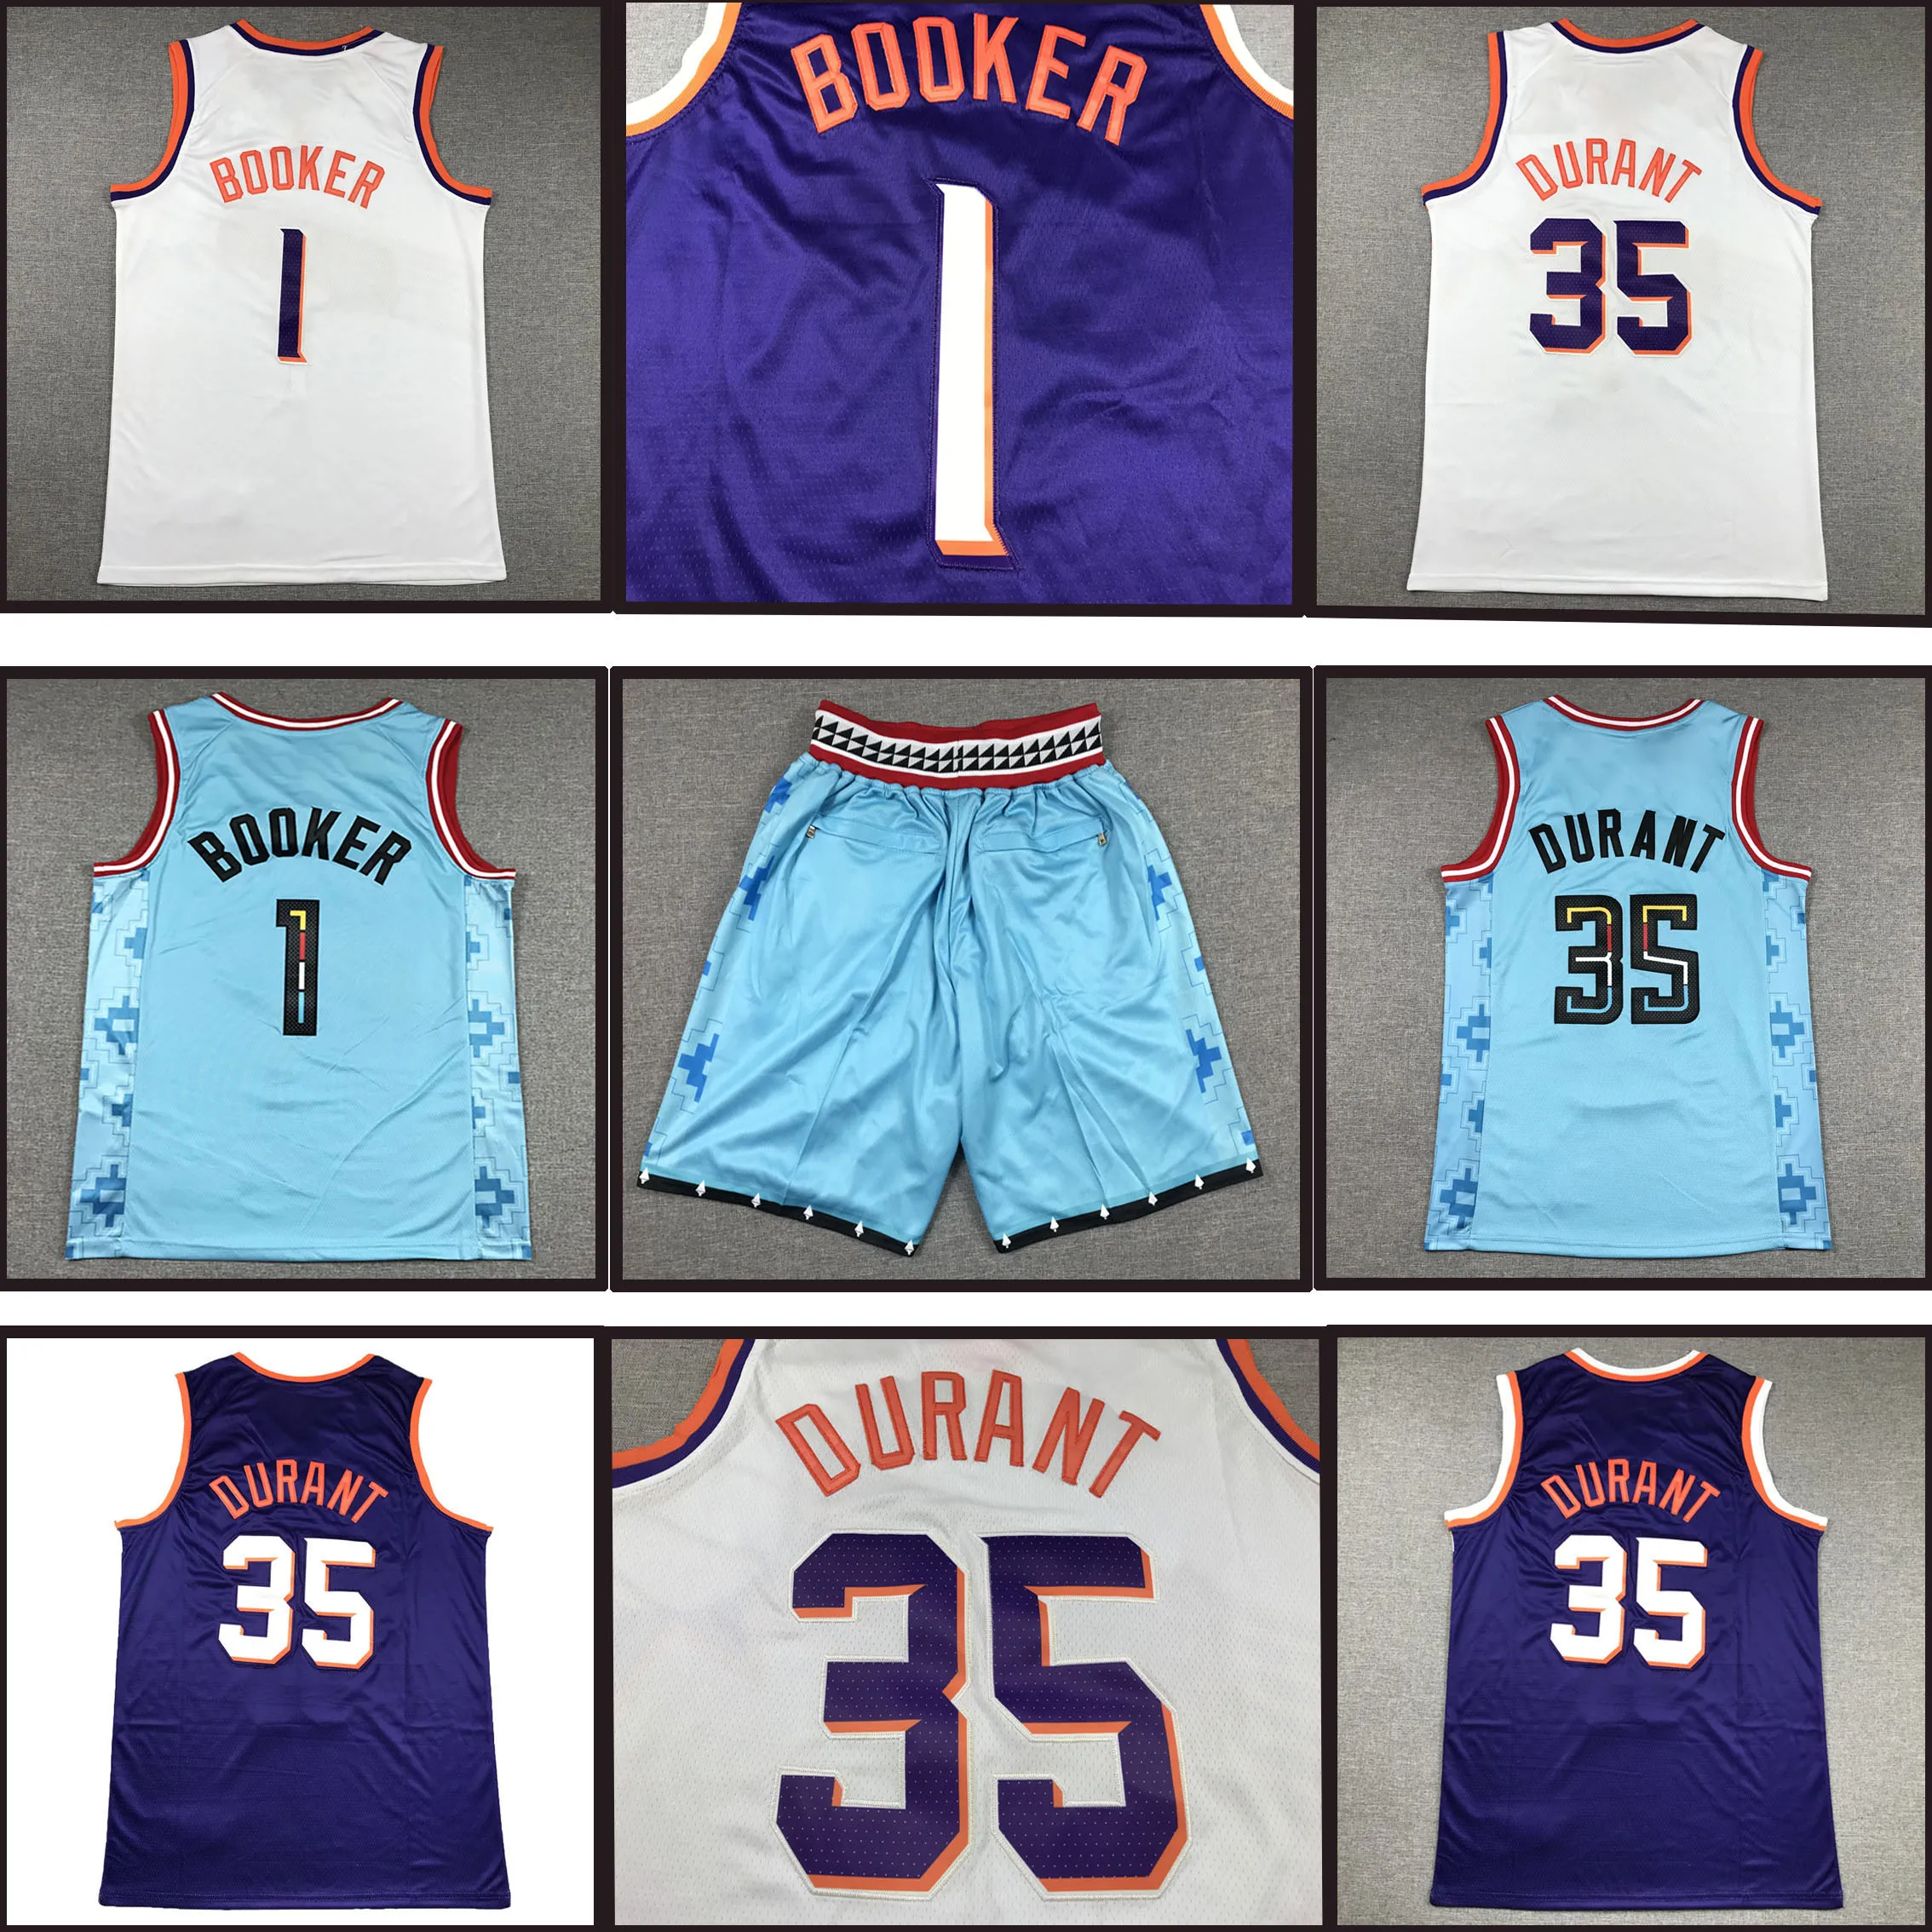 24 neue Basketball-Trikots Booneker Durante Pauthhel Herren, hochwertiges Design, Basketball-Trikots, bequeme Outdoor-Bekleidung, Anzahl kann individuell angepasst werden